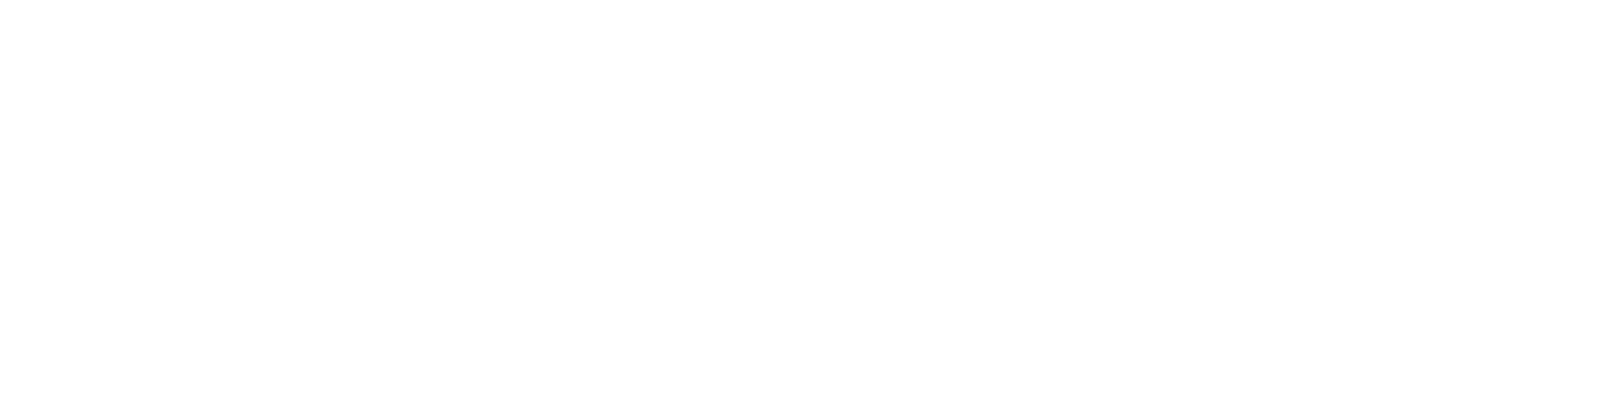 Yamama Saudi Cement Company logo pour fonds sombres (PNG transparent)